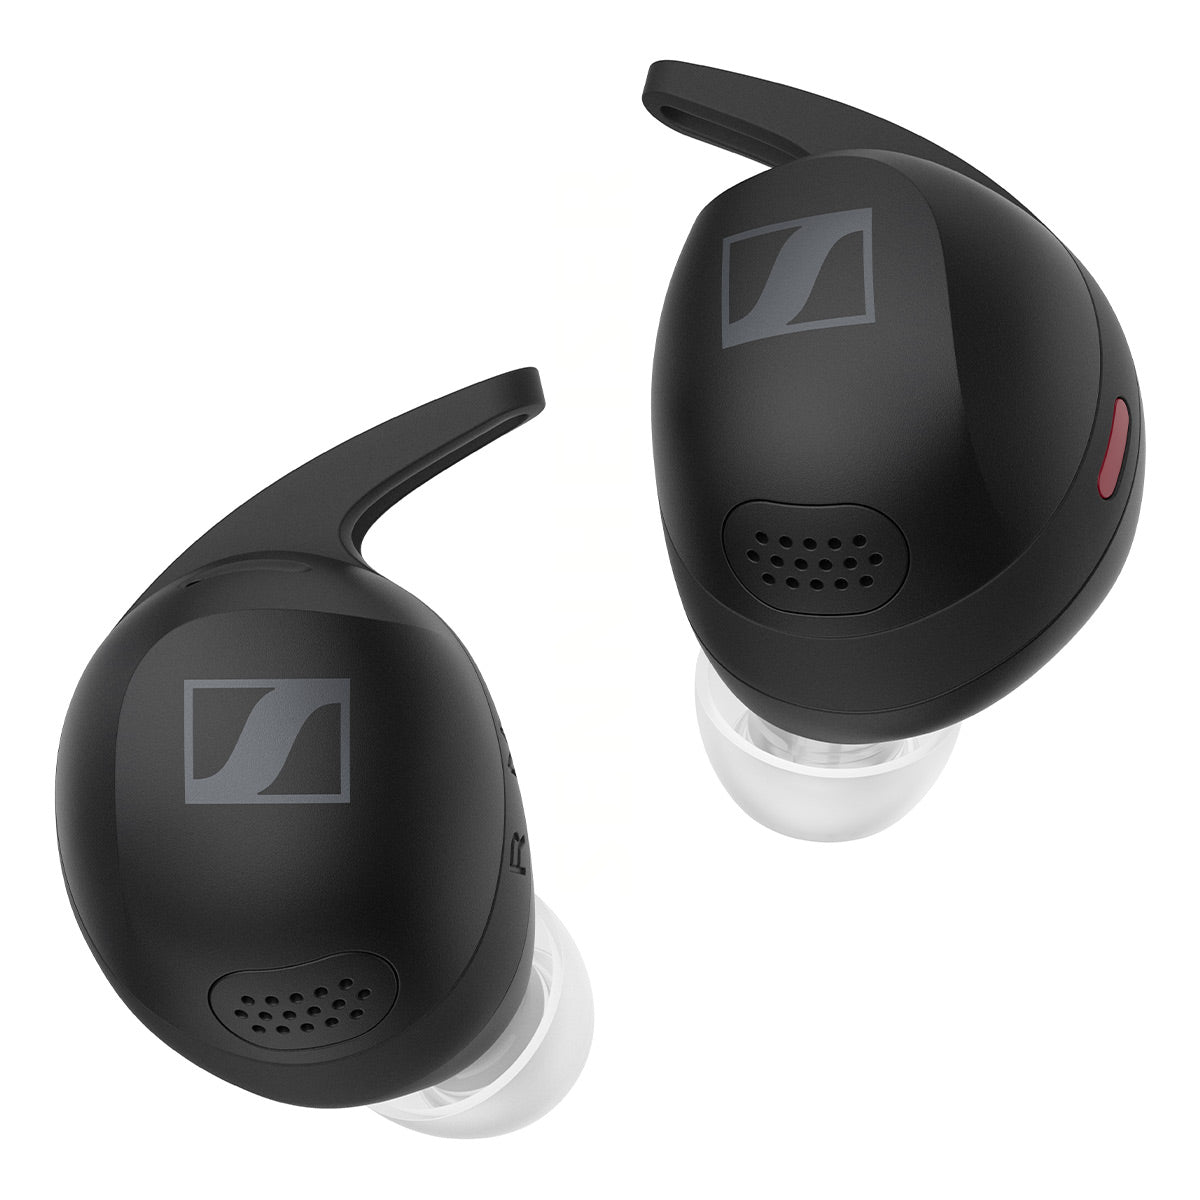 Sennheiser Momentum Sport True Wireless Earbuds with Adaptive Noise Cancellation (Black)